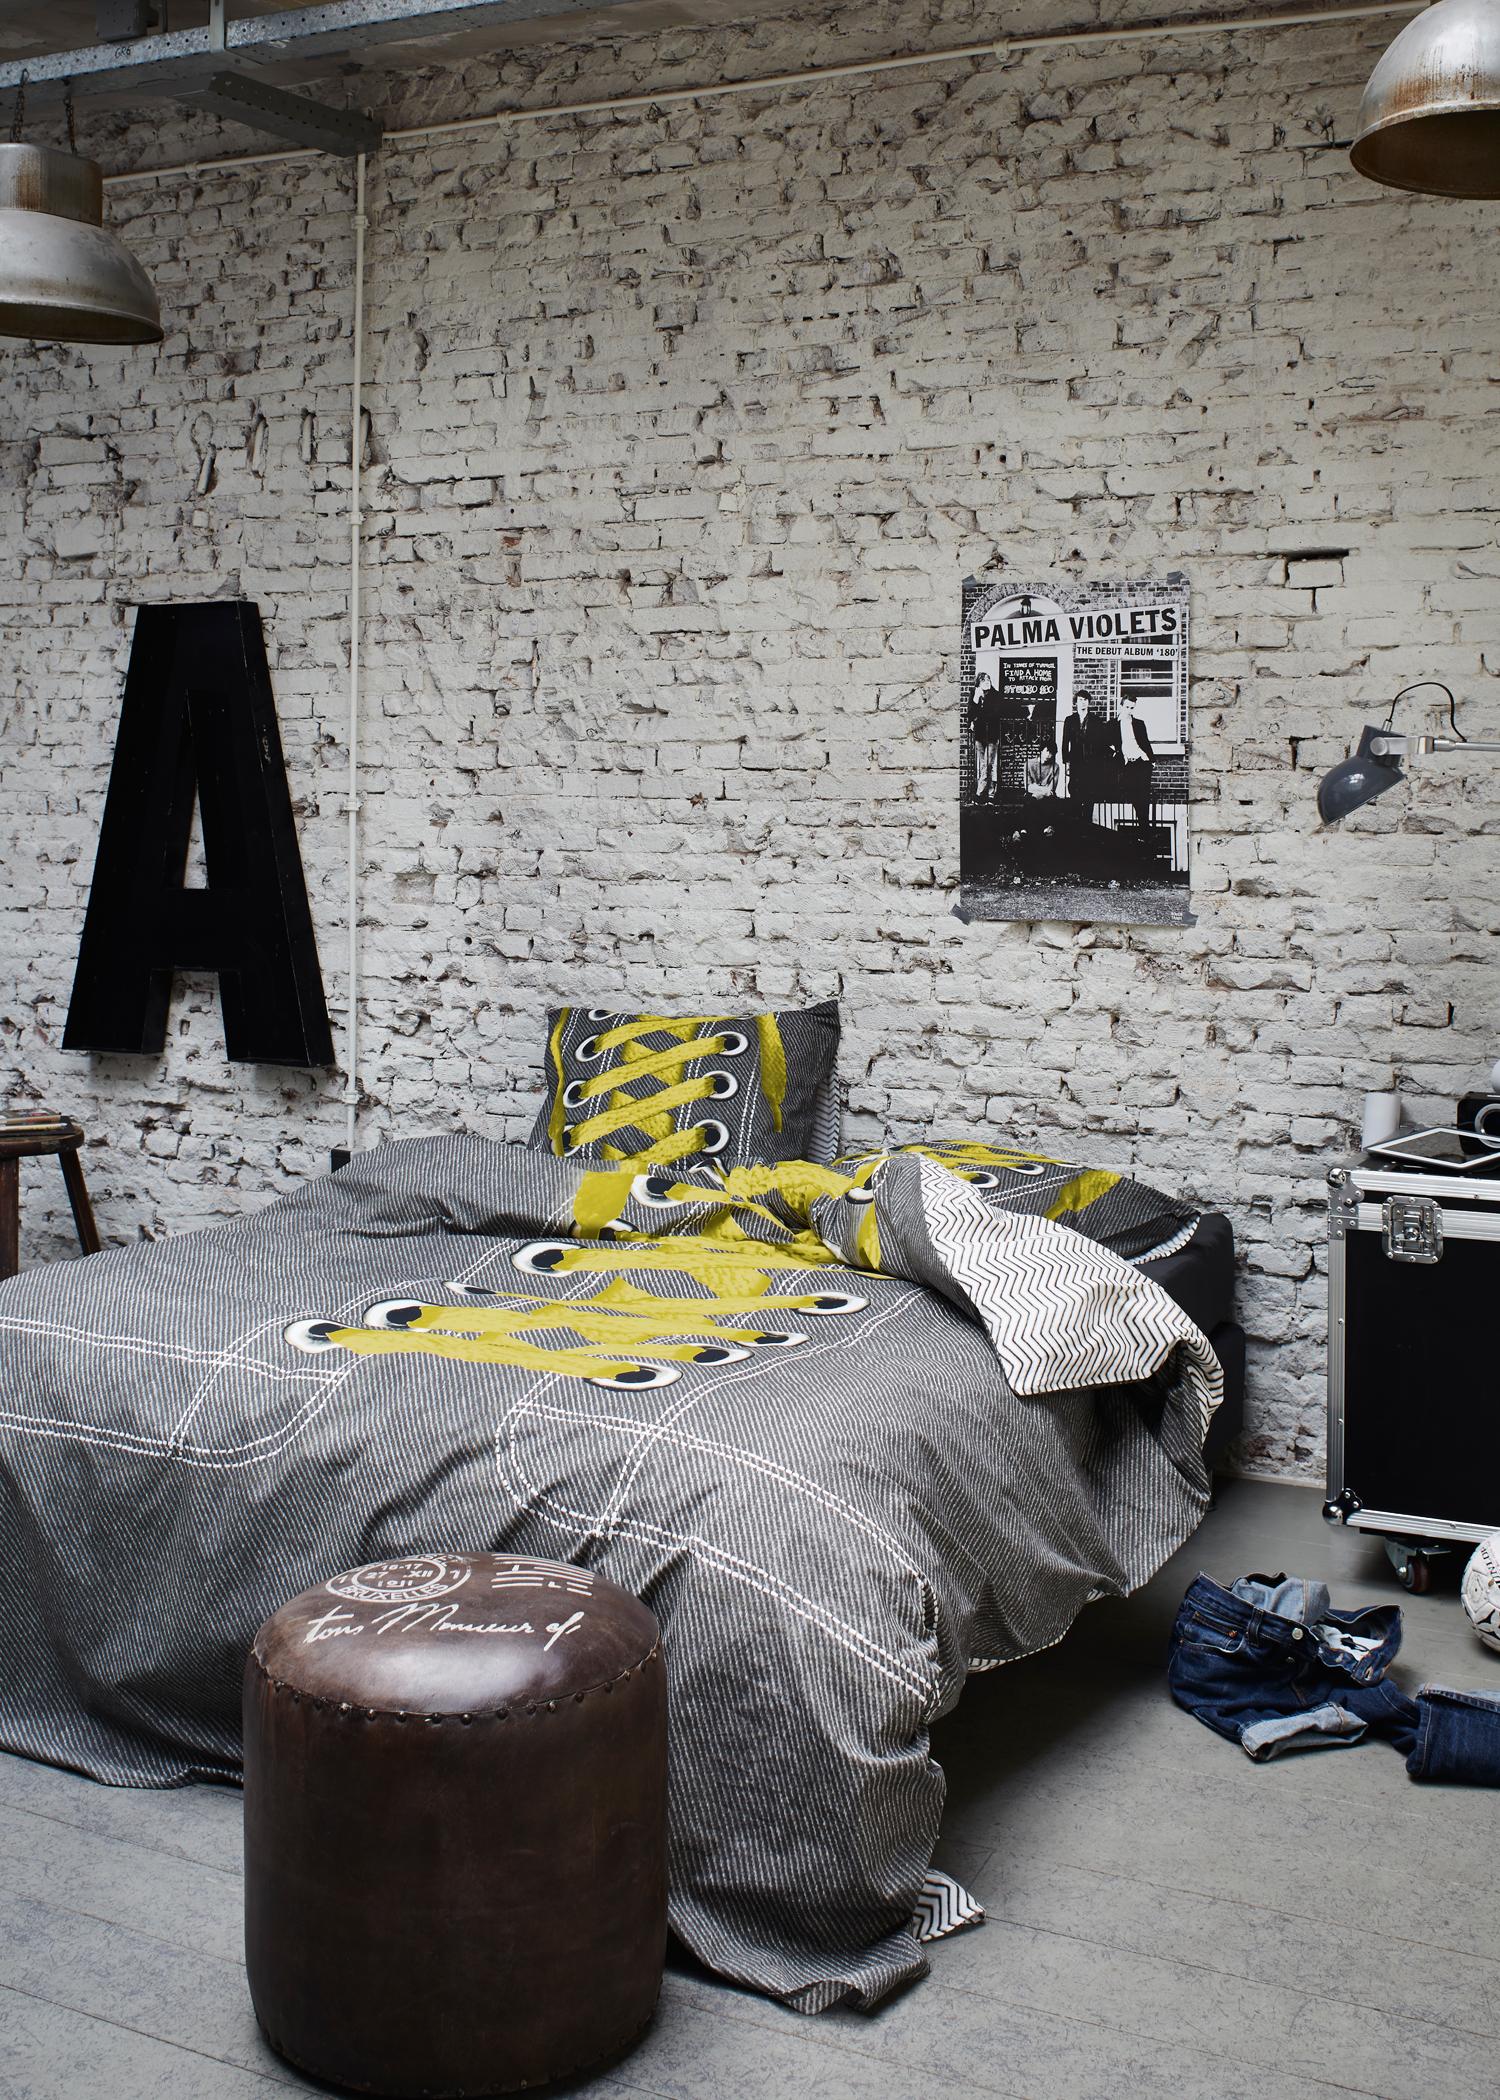 Industrie-Look im Schlafzimmer #bettwäsche #jugendzimmer #wanddeko #grauerbodenbelag #jugendbett ©Essenza Home/Covers & Co